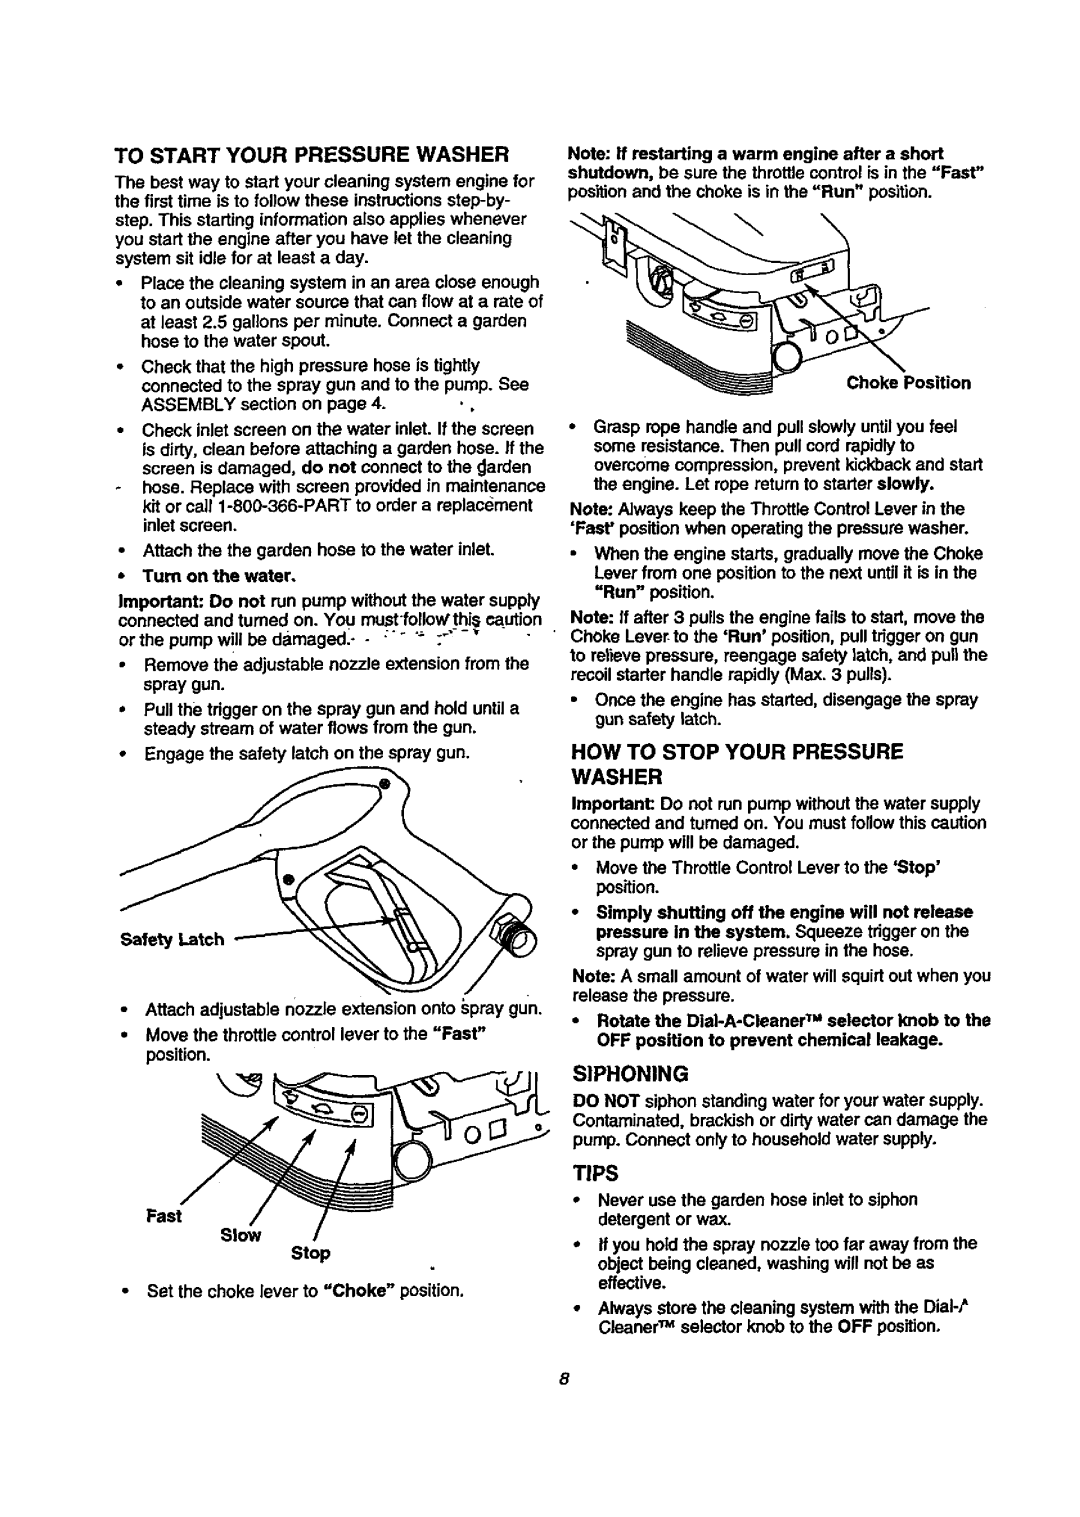 Craftsman 580.768020 manual To Start Your Pressure Washer, How To Stop Your Pressure Washer, Siphoning, Tips 